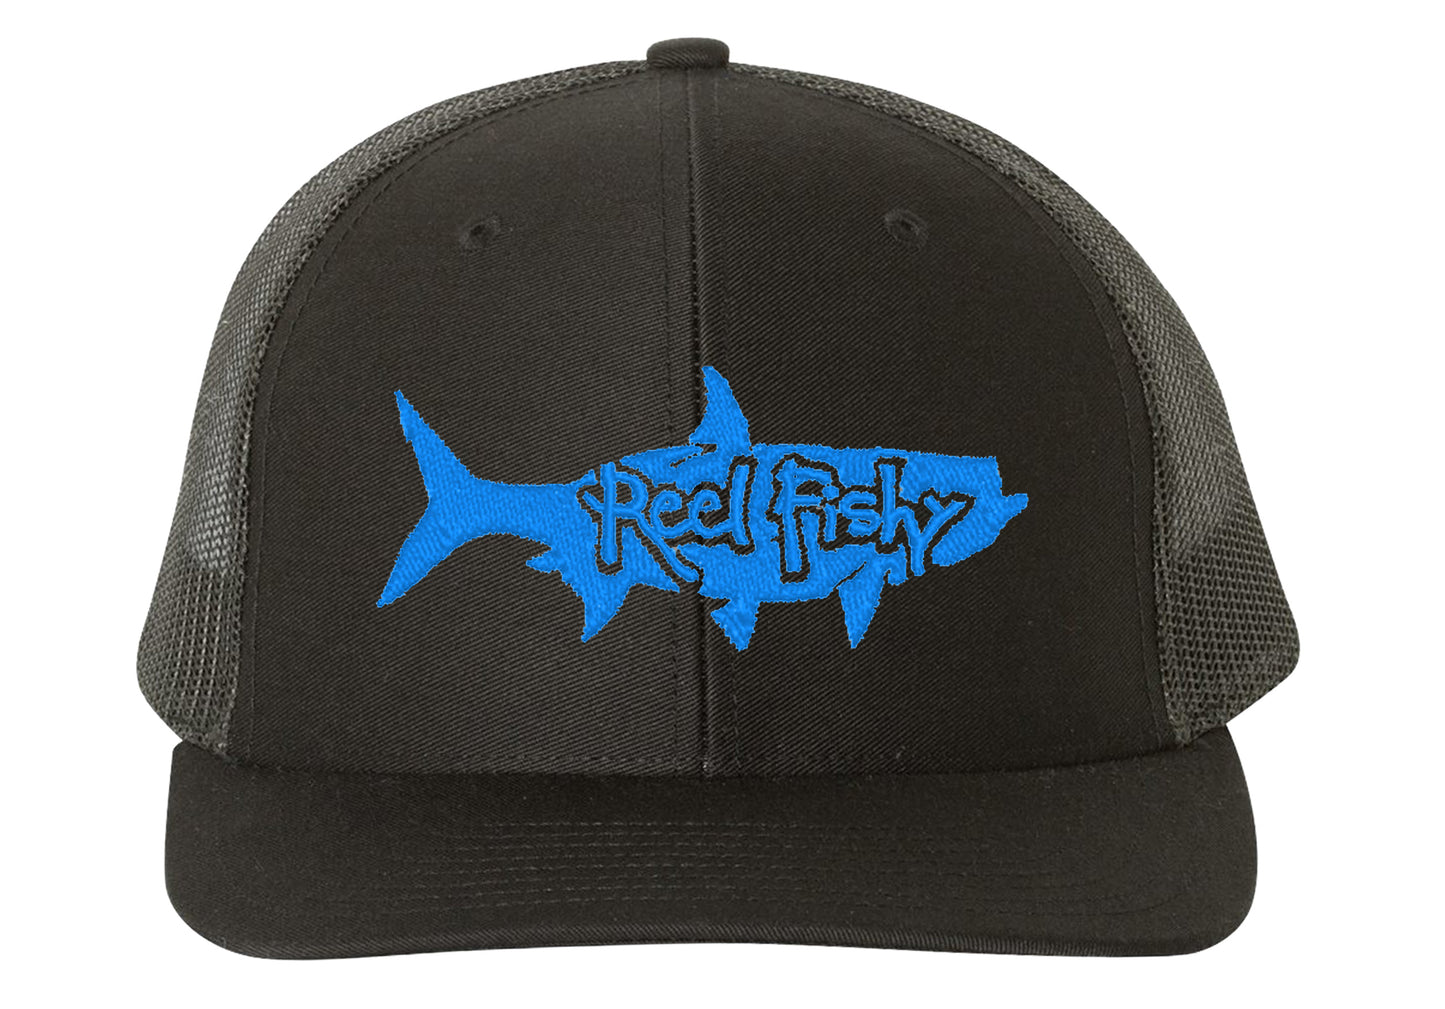 Black Trucker Hat with Turquoise Tarpon Reel Fishy Logo